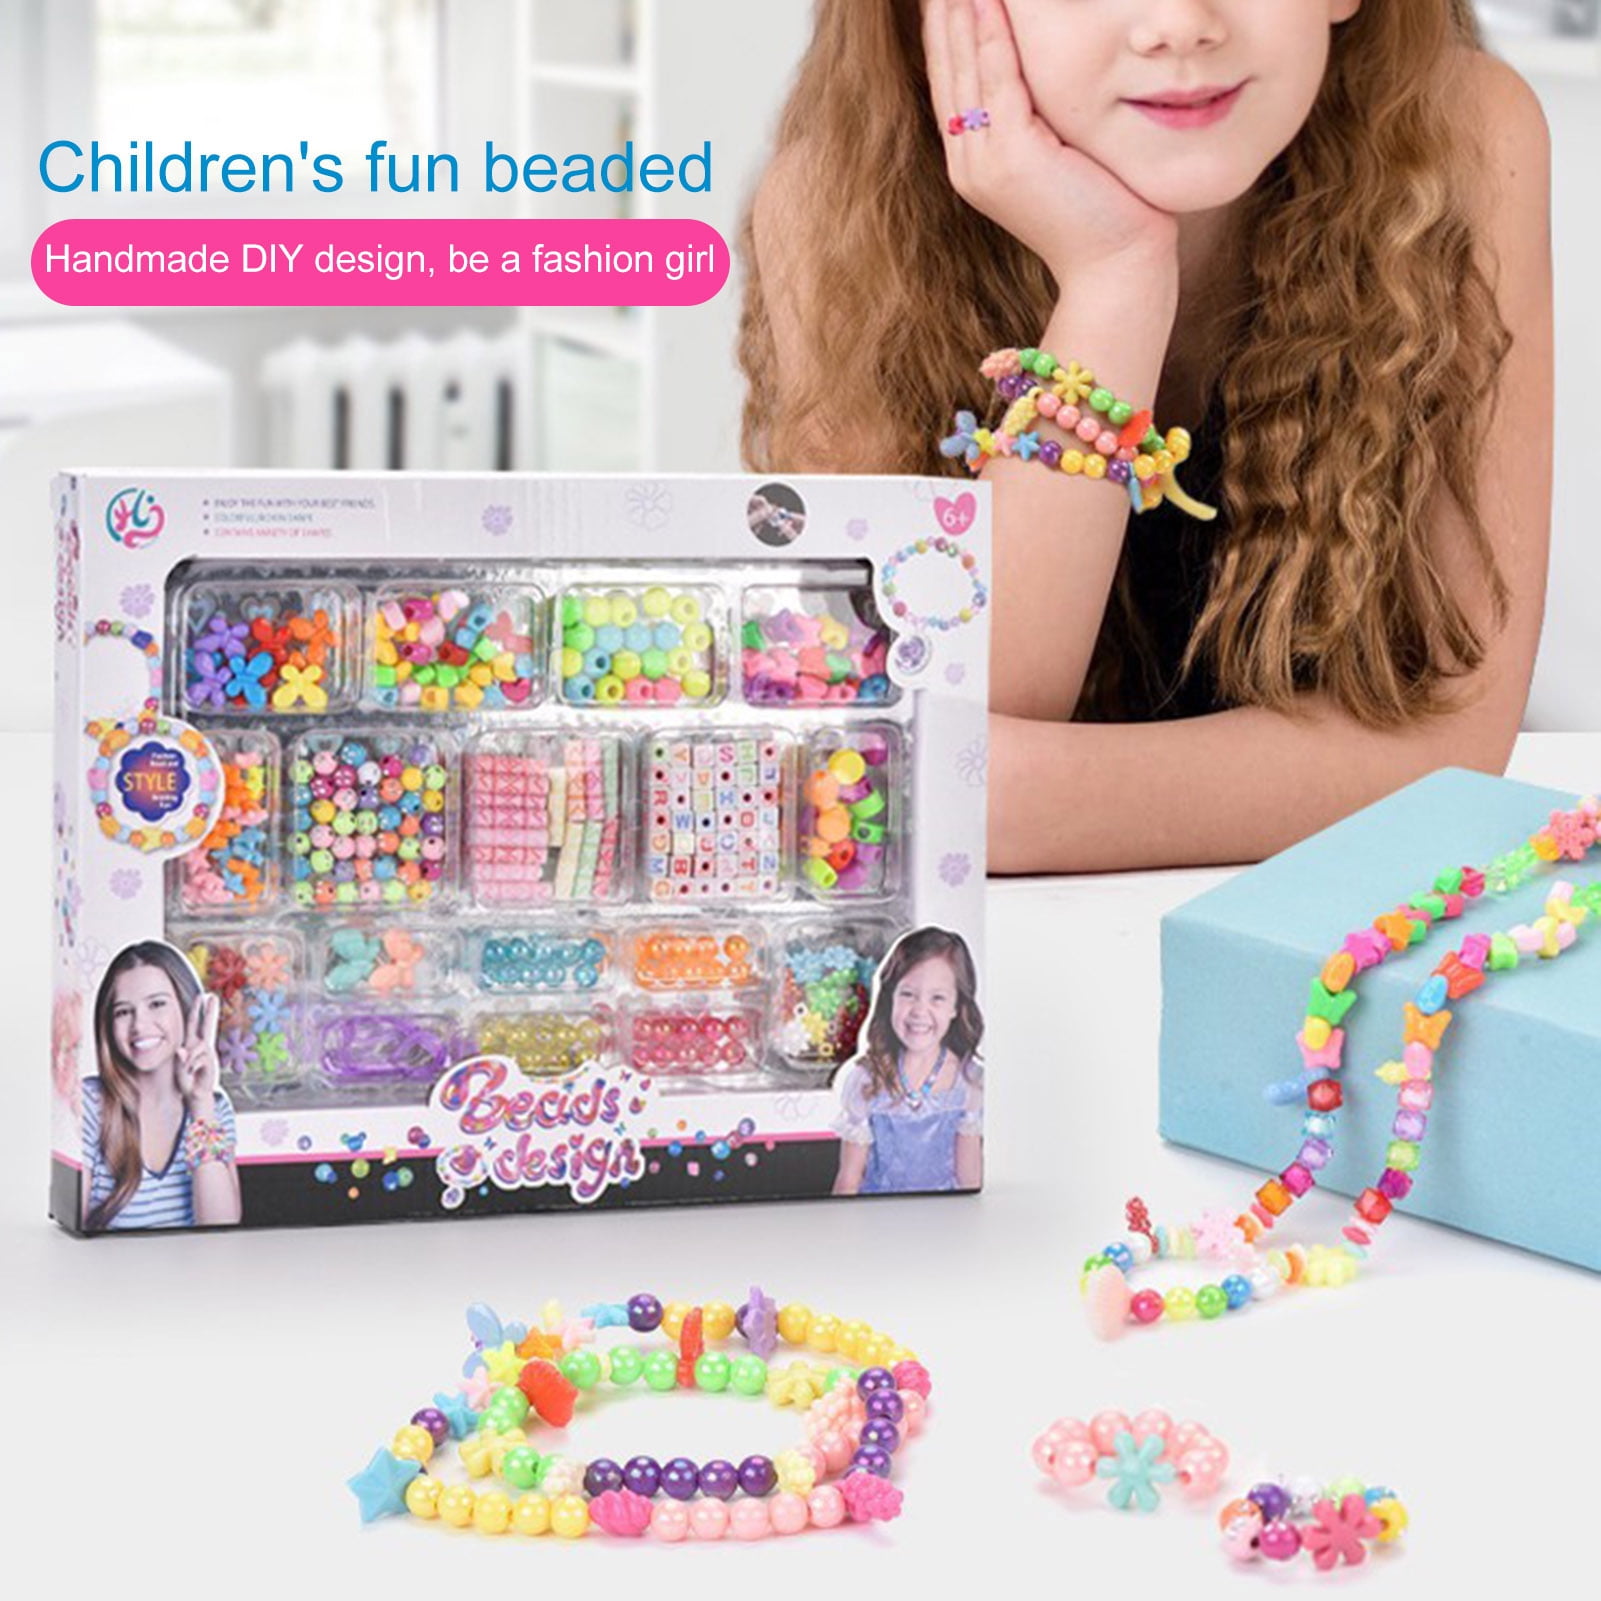 Funtopia Glass Seed Beads for Jewelry Making Kit, 60 Colors 21600 Pcs+ Bracelet Making Kit, Friendship Bracelets Kit with Letter Beads for DIY, Art